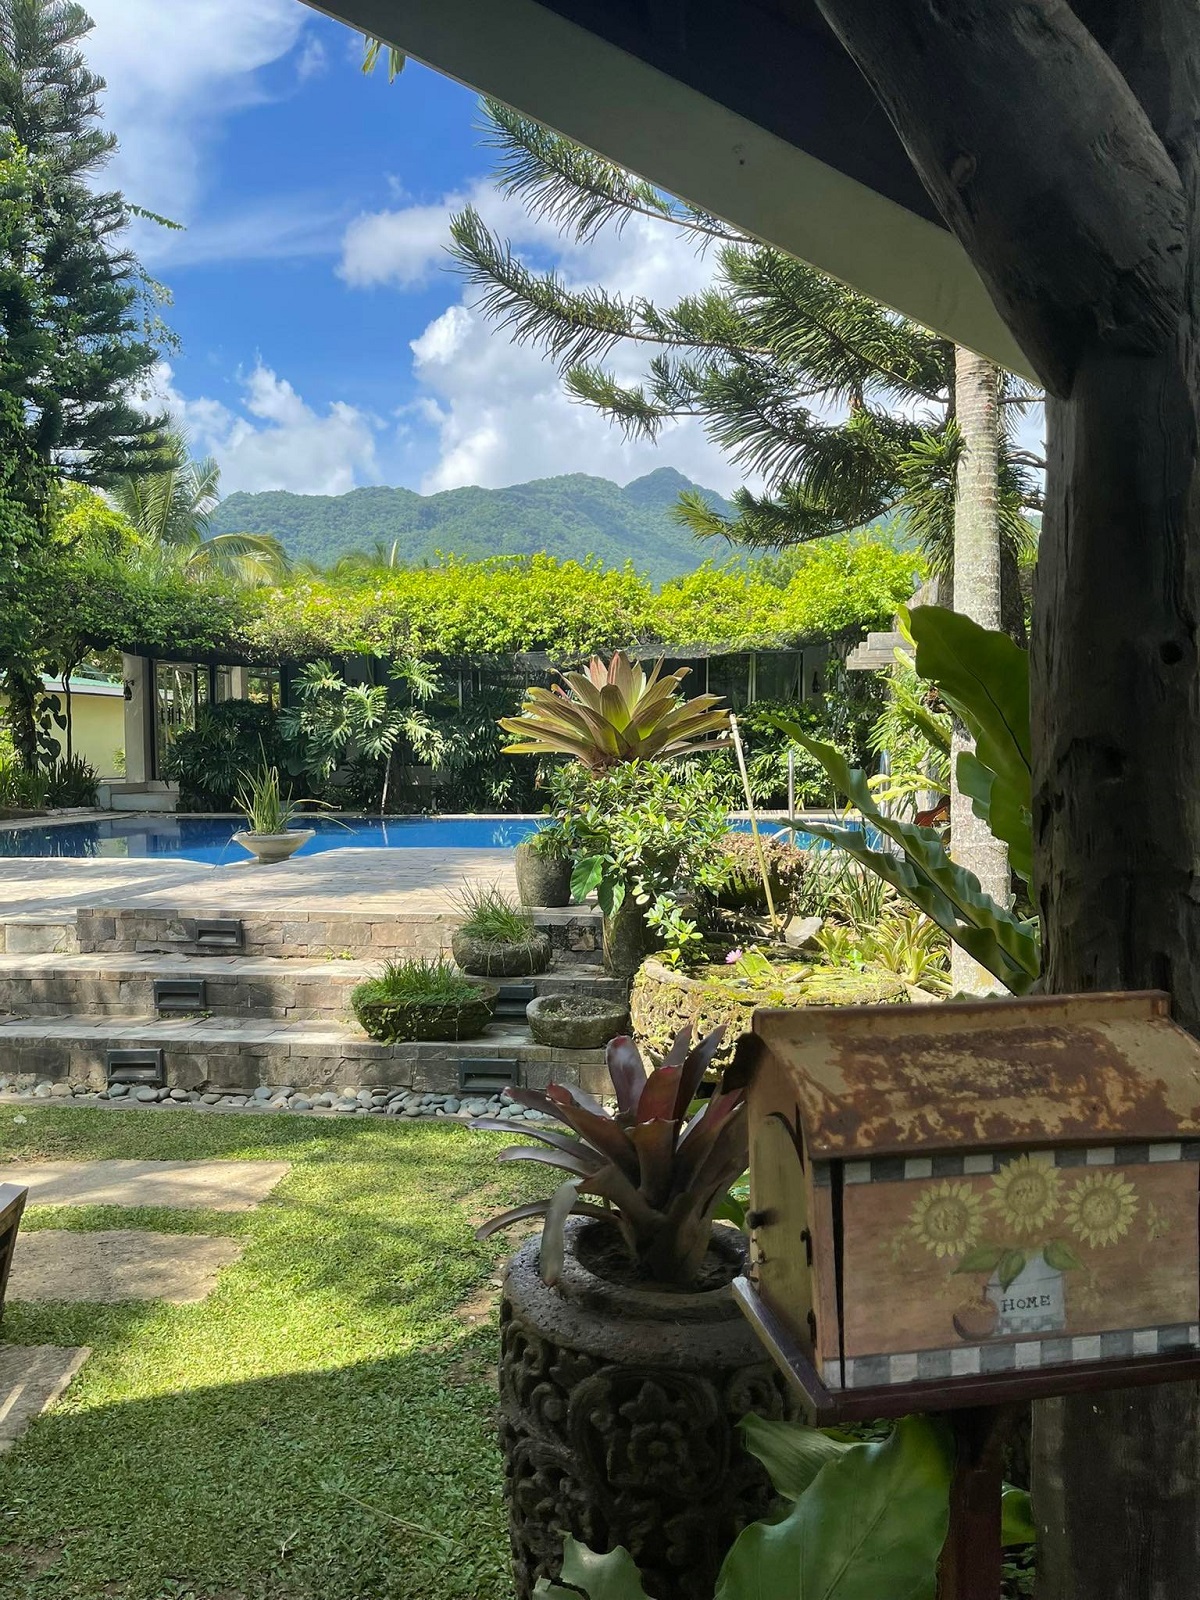 3C's Place private resort in Lipa, Batangas